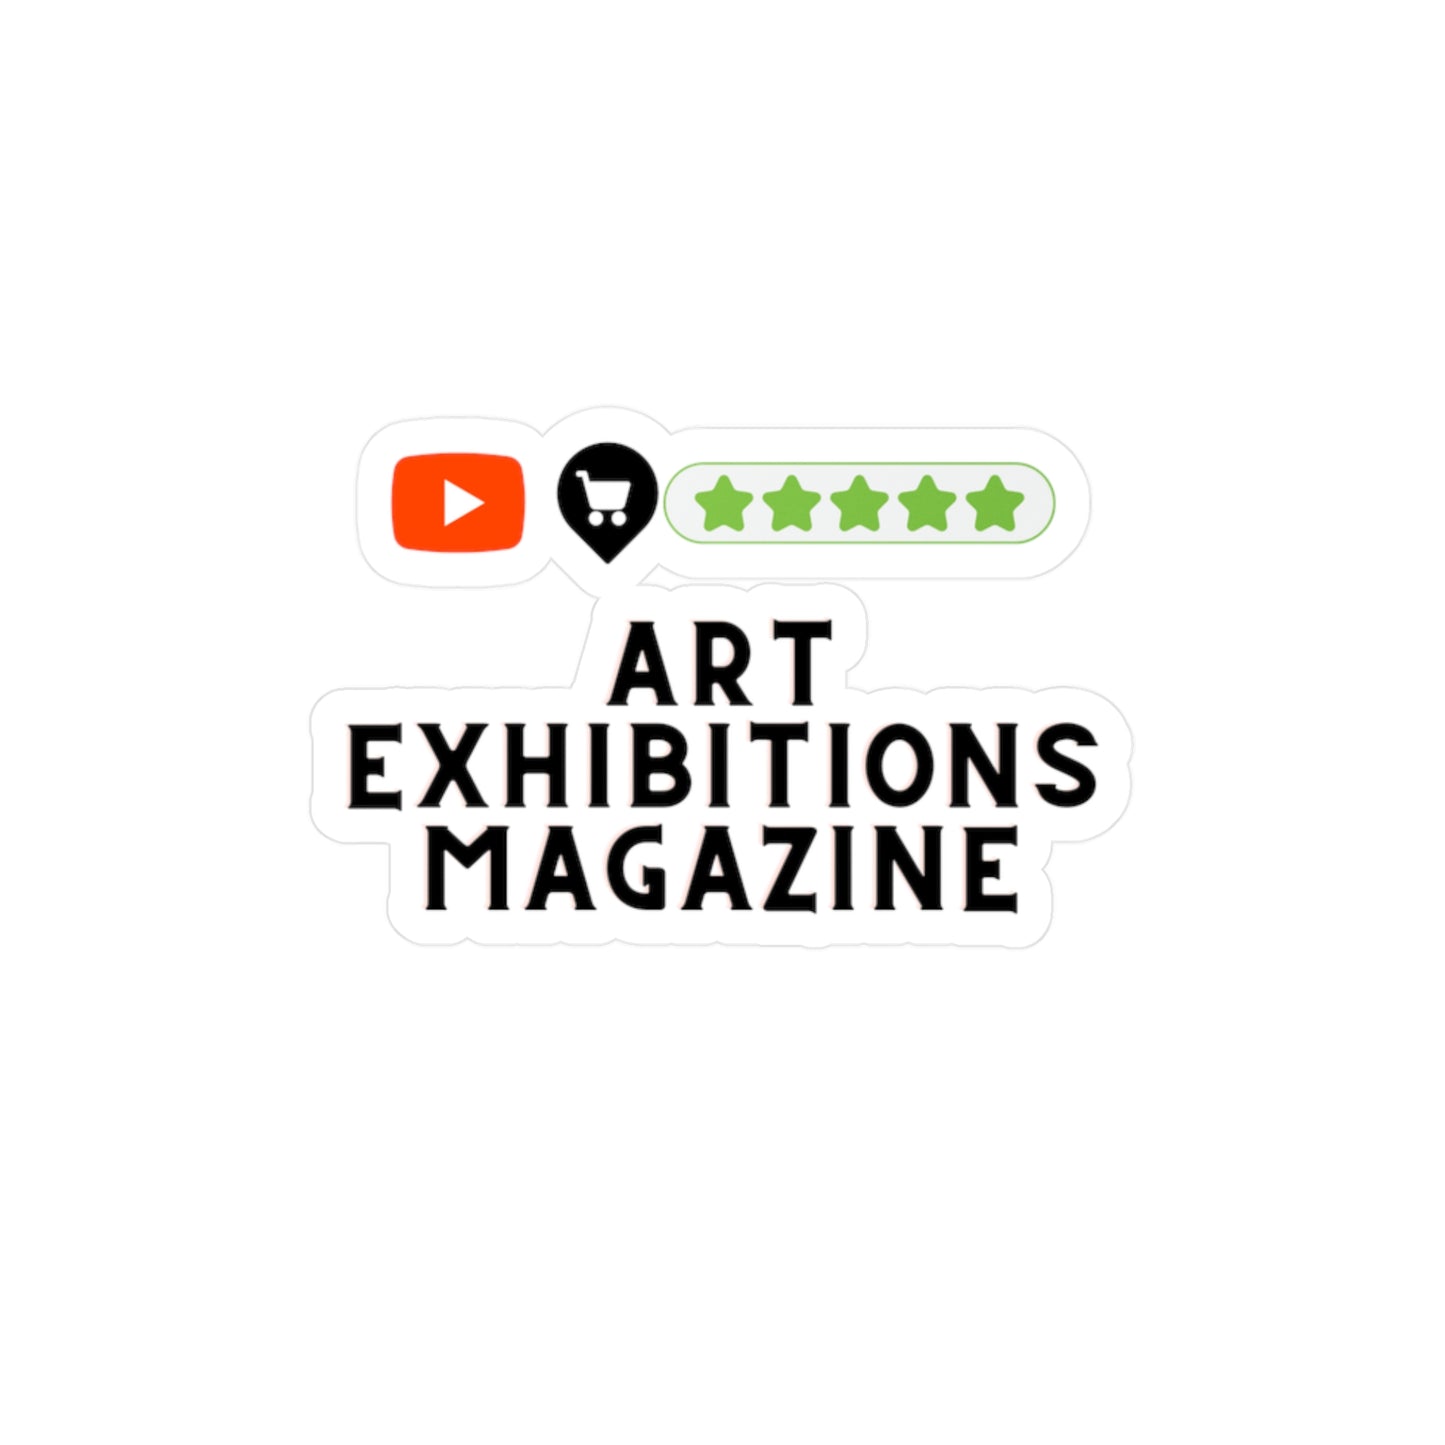 Art Exhibitions Magazine Official logo Kiss-Cut Vinyl Decals by ViralDestinations